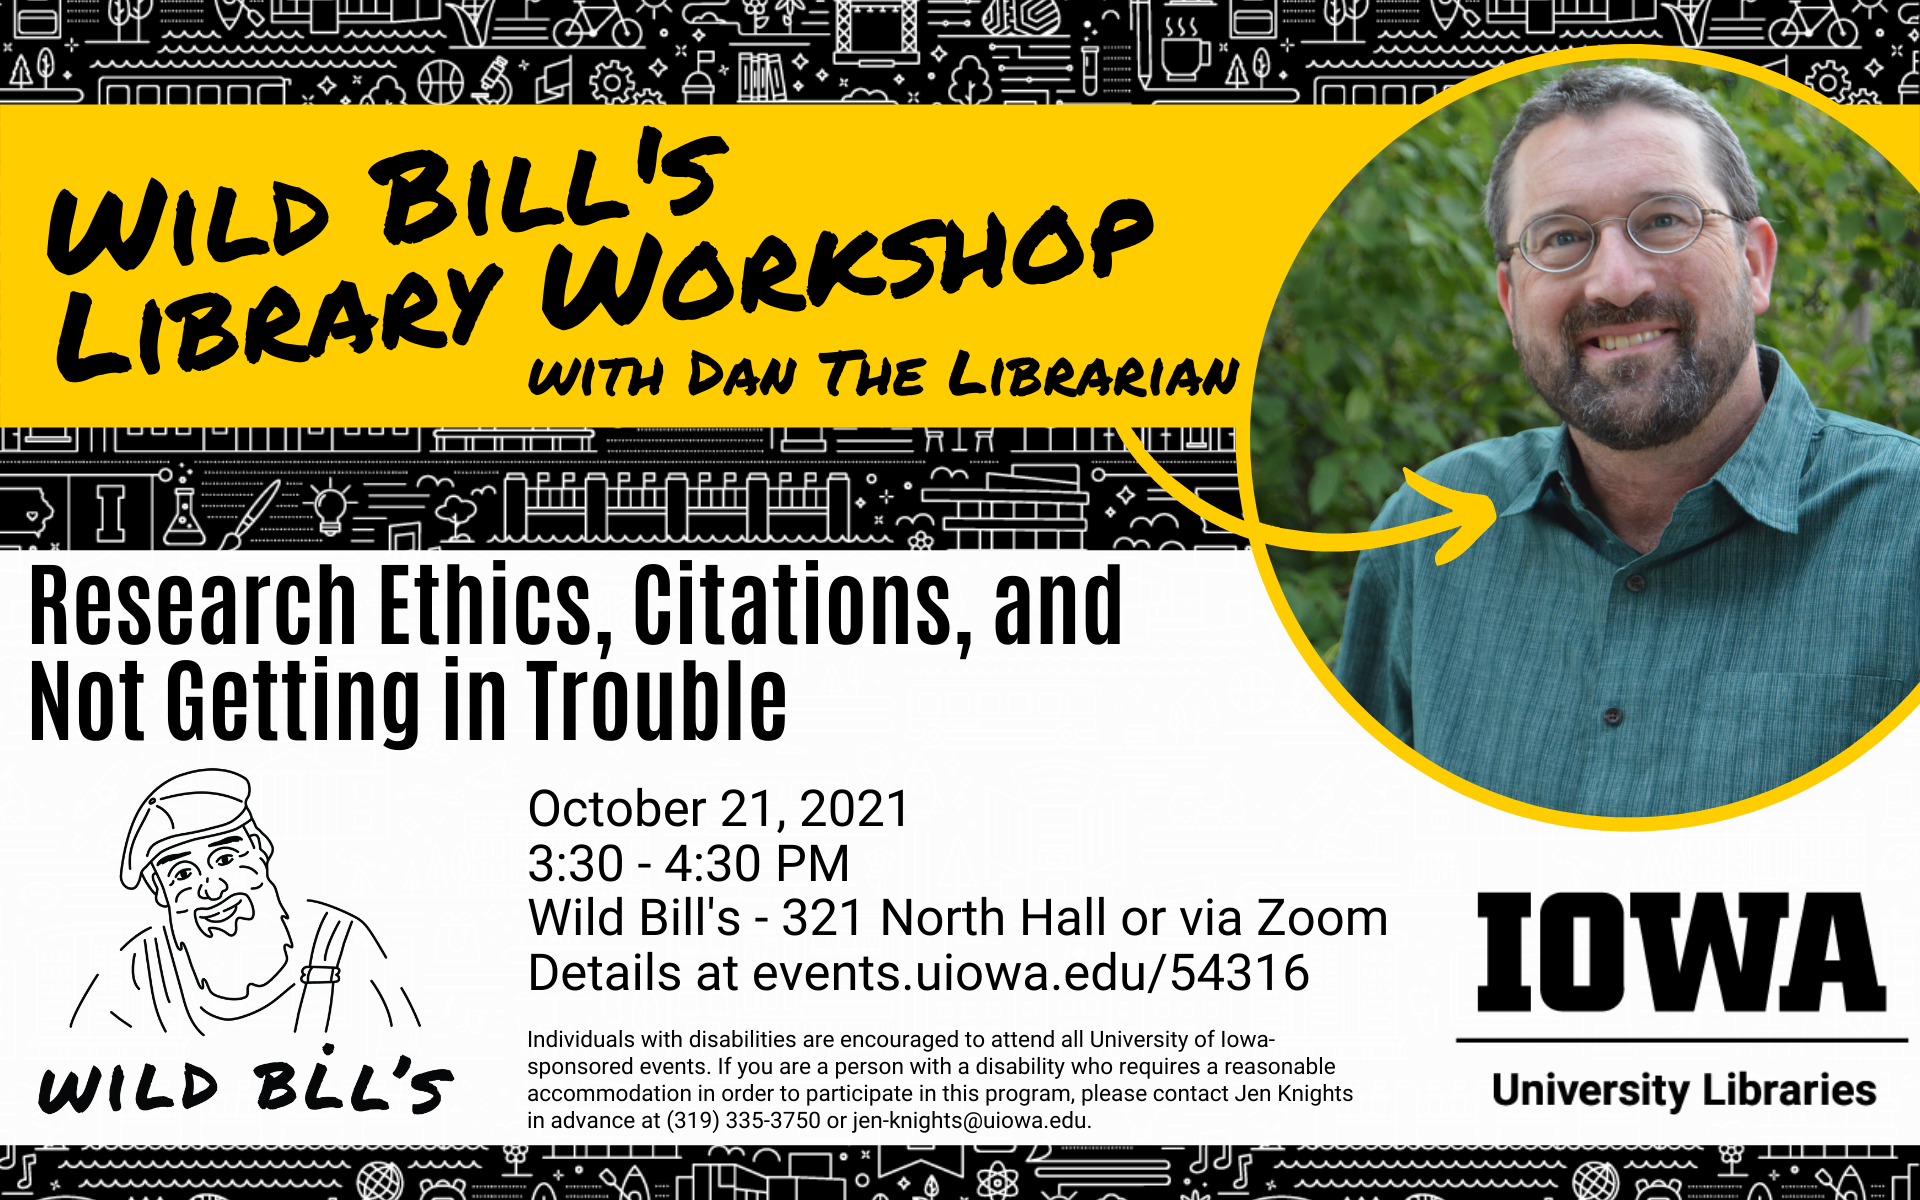 Wild Bill's Library Workshop October 21, 3:30-4:30 pm in Wild Bill's